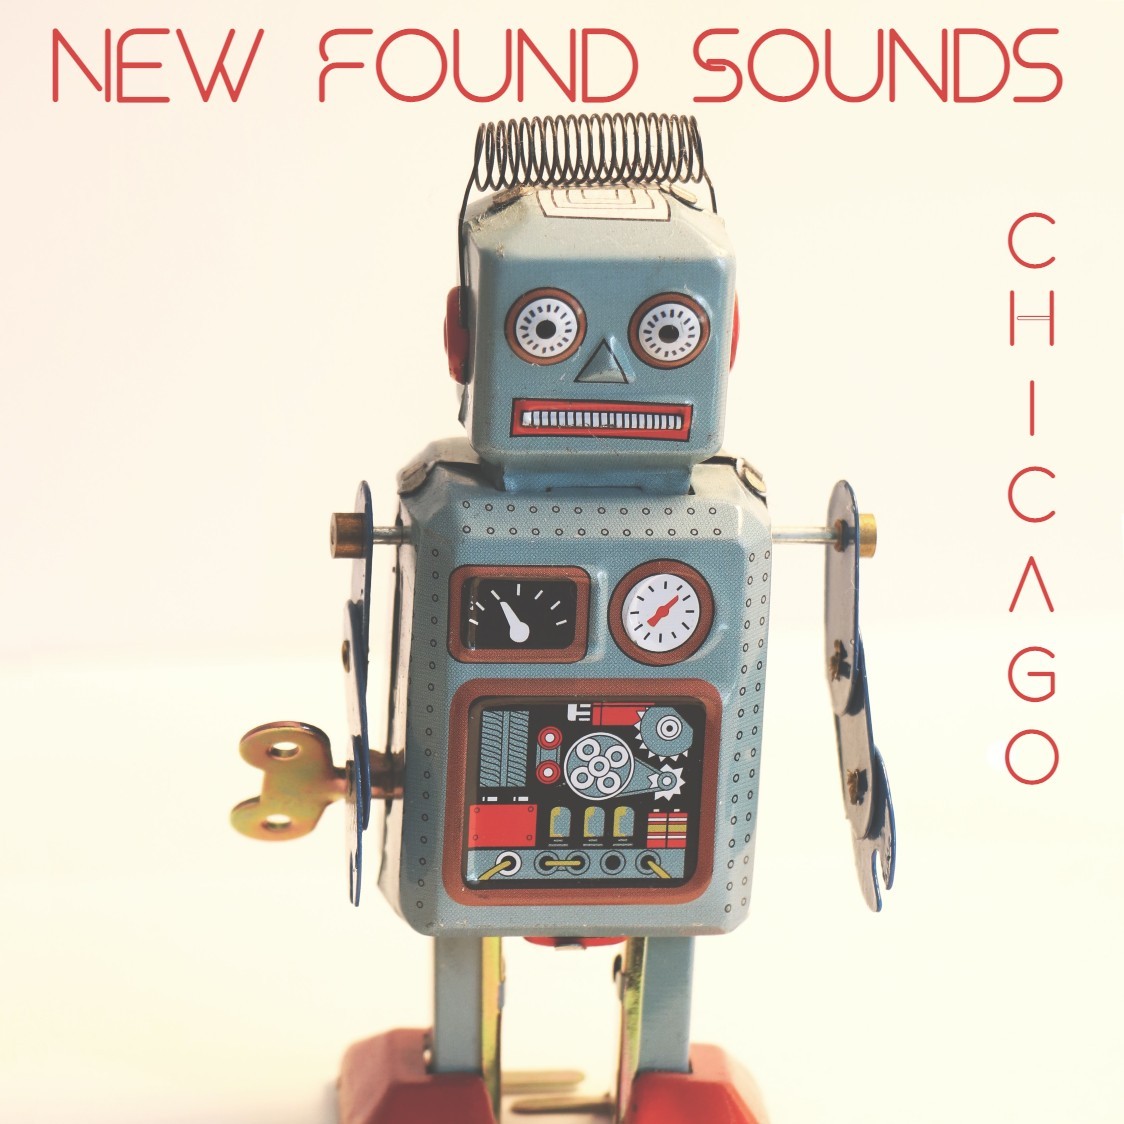 New Found Sounds